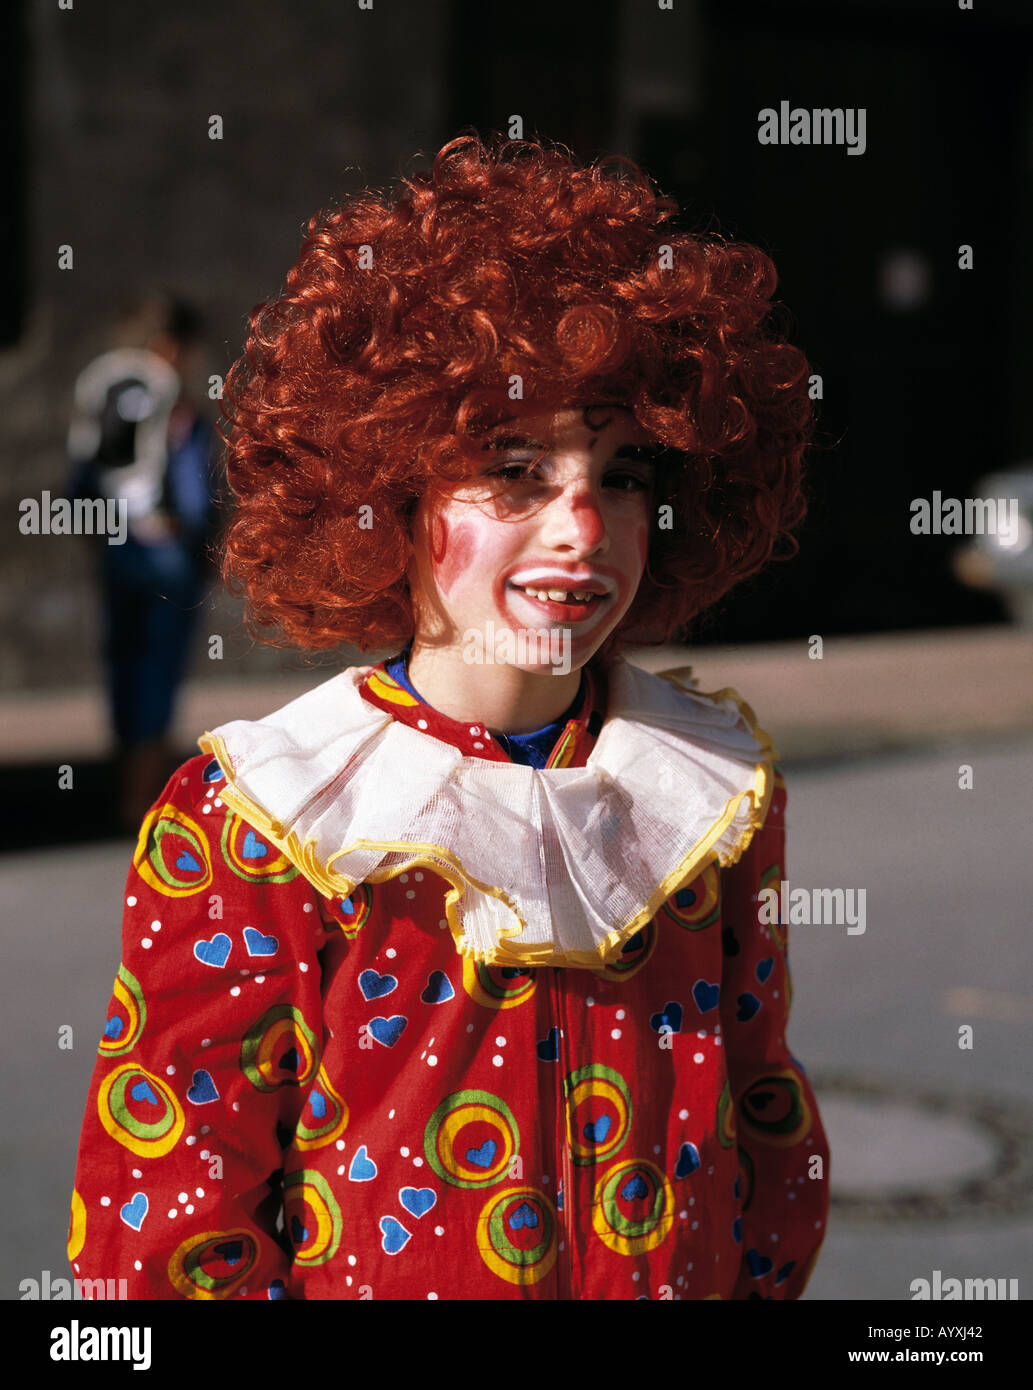 Karneval, Karneval Kinder, junge, verschleierte, rote Perücke, bemaltem Gesicht, Clownskostüm, bunt, D-Kenzingen, Oberrhein, Baden-Württemberg, Stockfoto